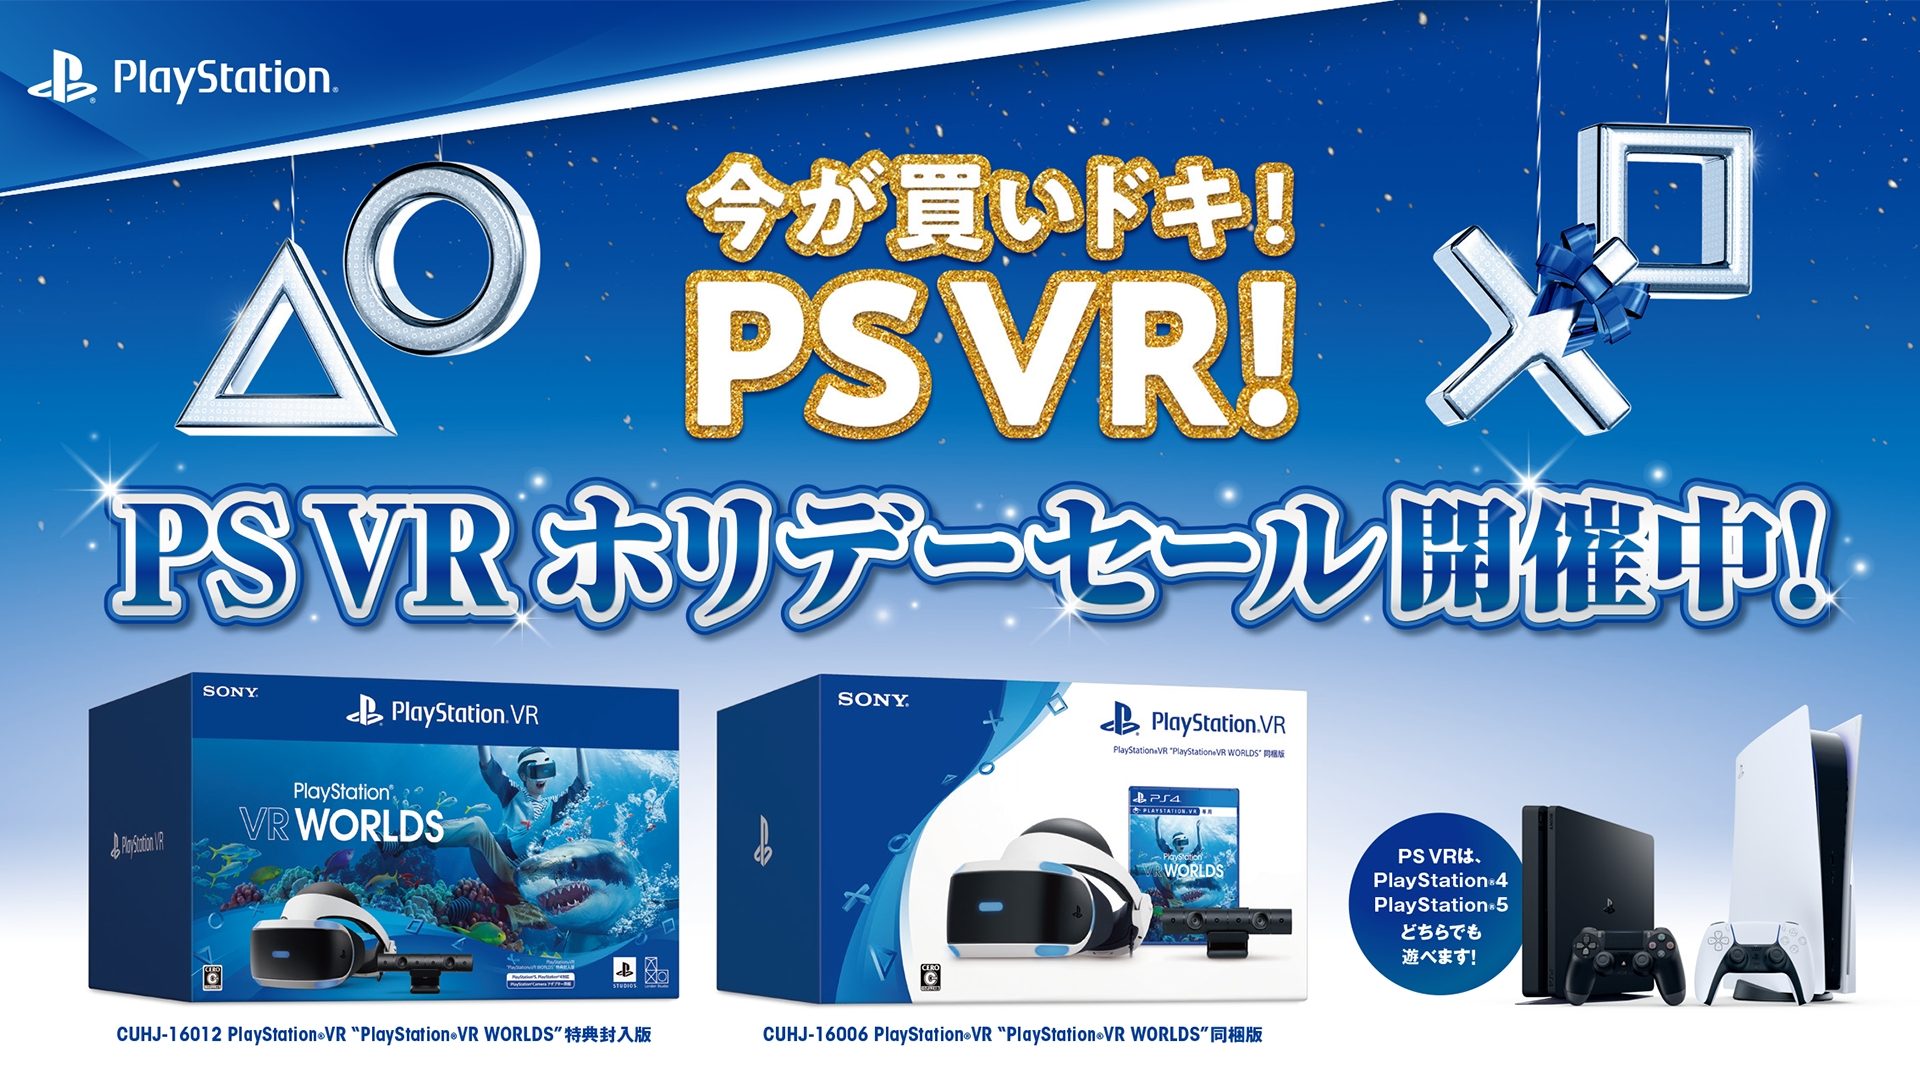 PlayStation®VRのお得なキャンペーン｢PS VR ホリデーセール｣開催